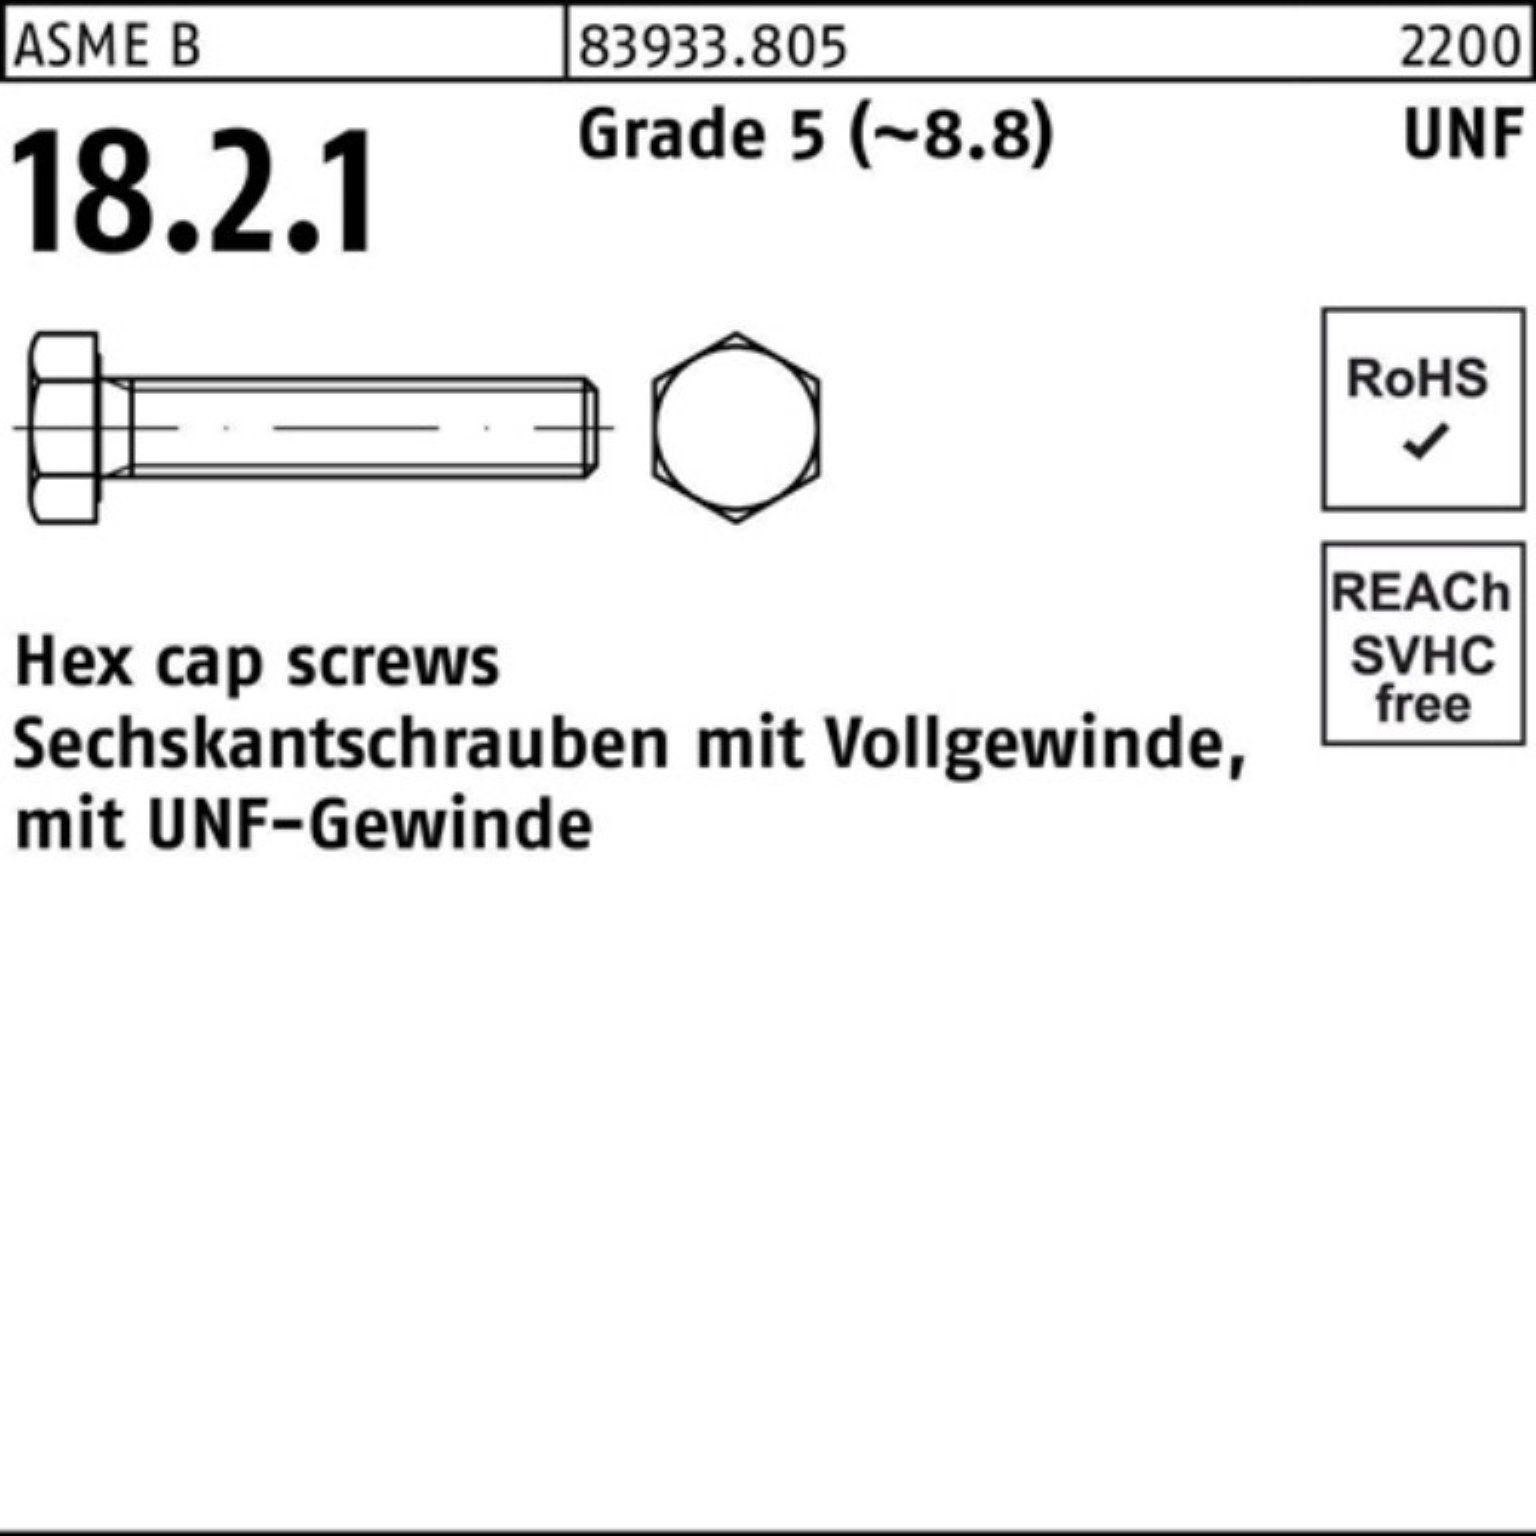 Reyher Sechskantschraube 100er Pack Sechskantschraube R 83933 UNF-Gewinde VG 5/8x 1 Grade 5 (8